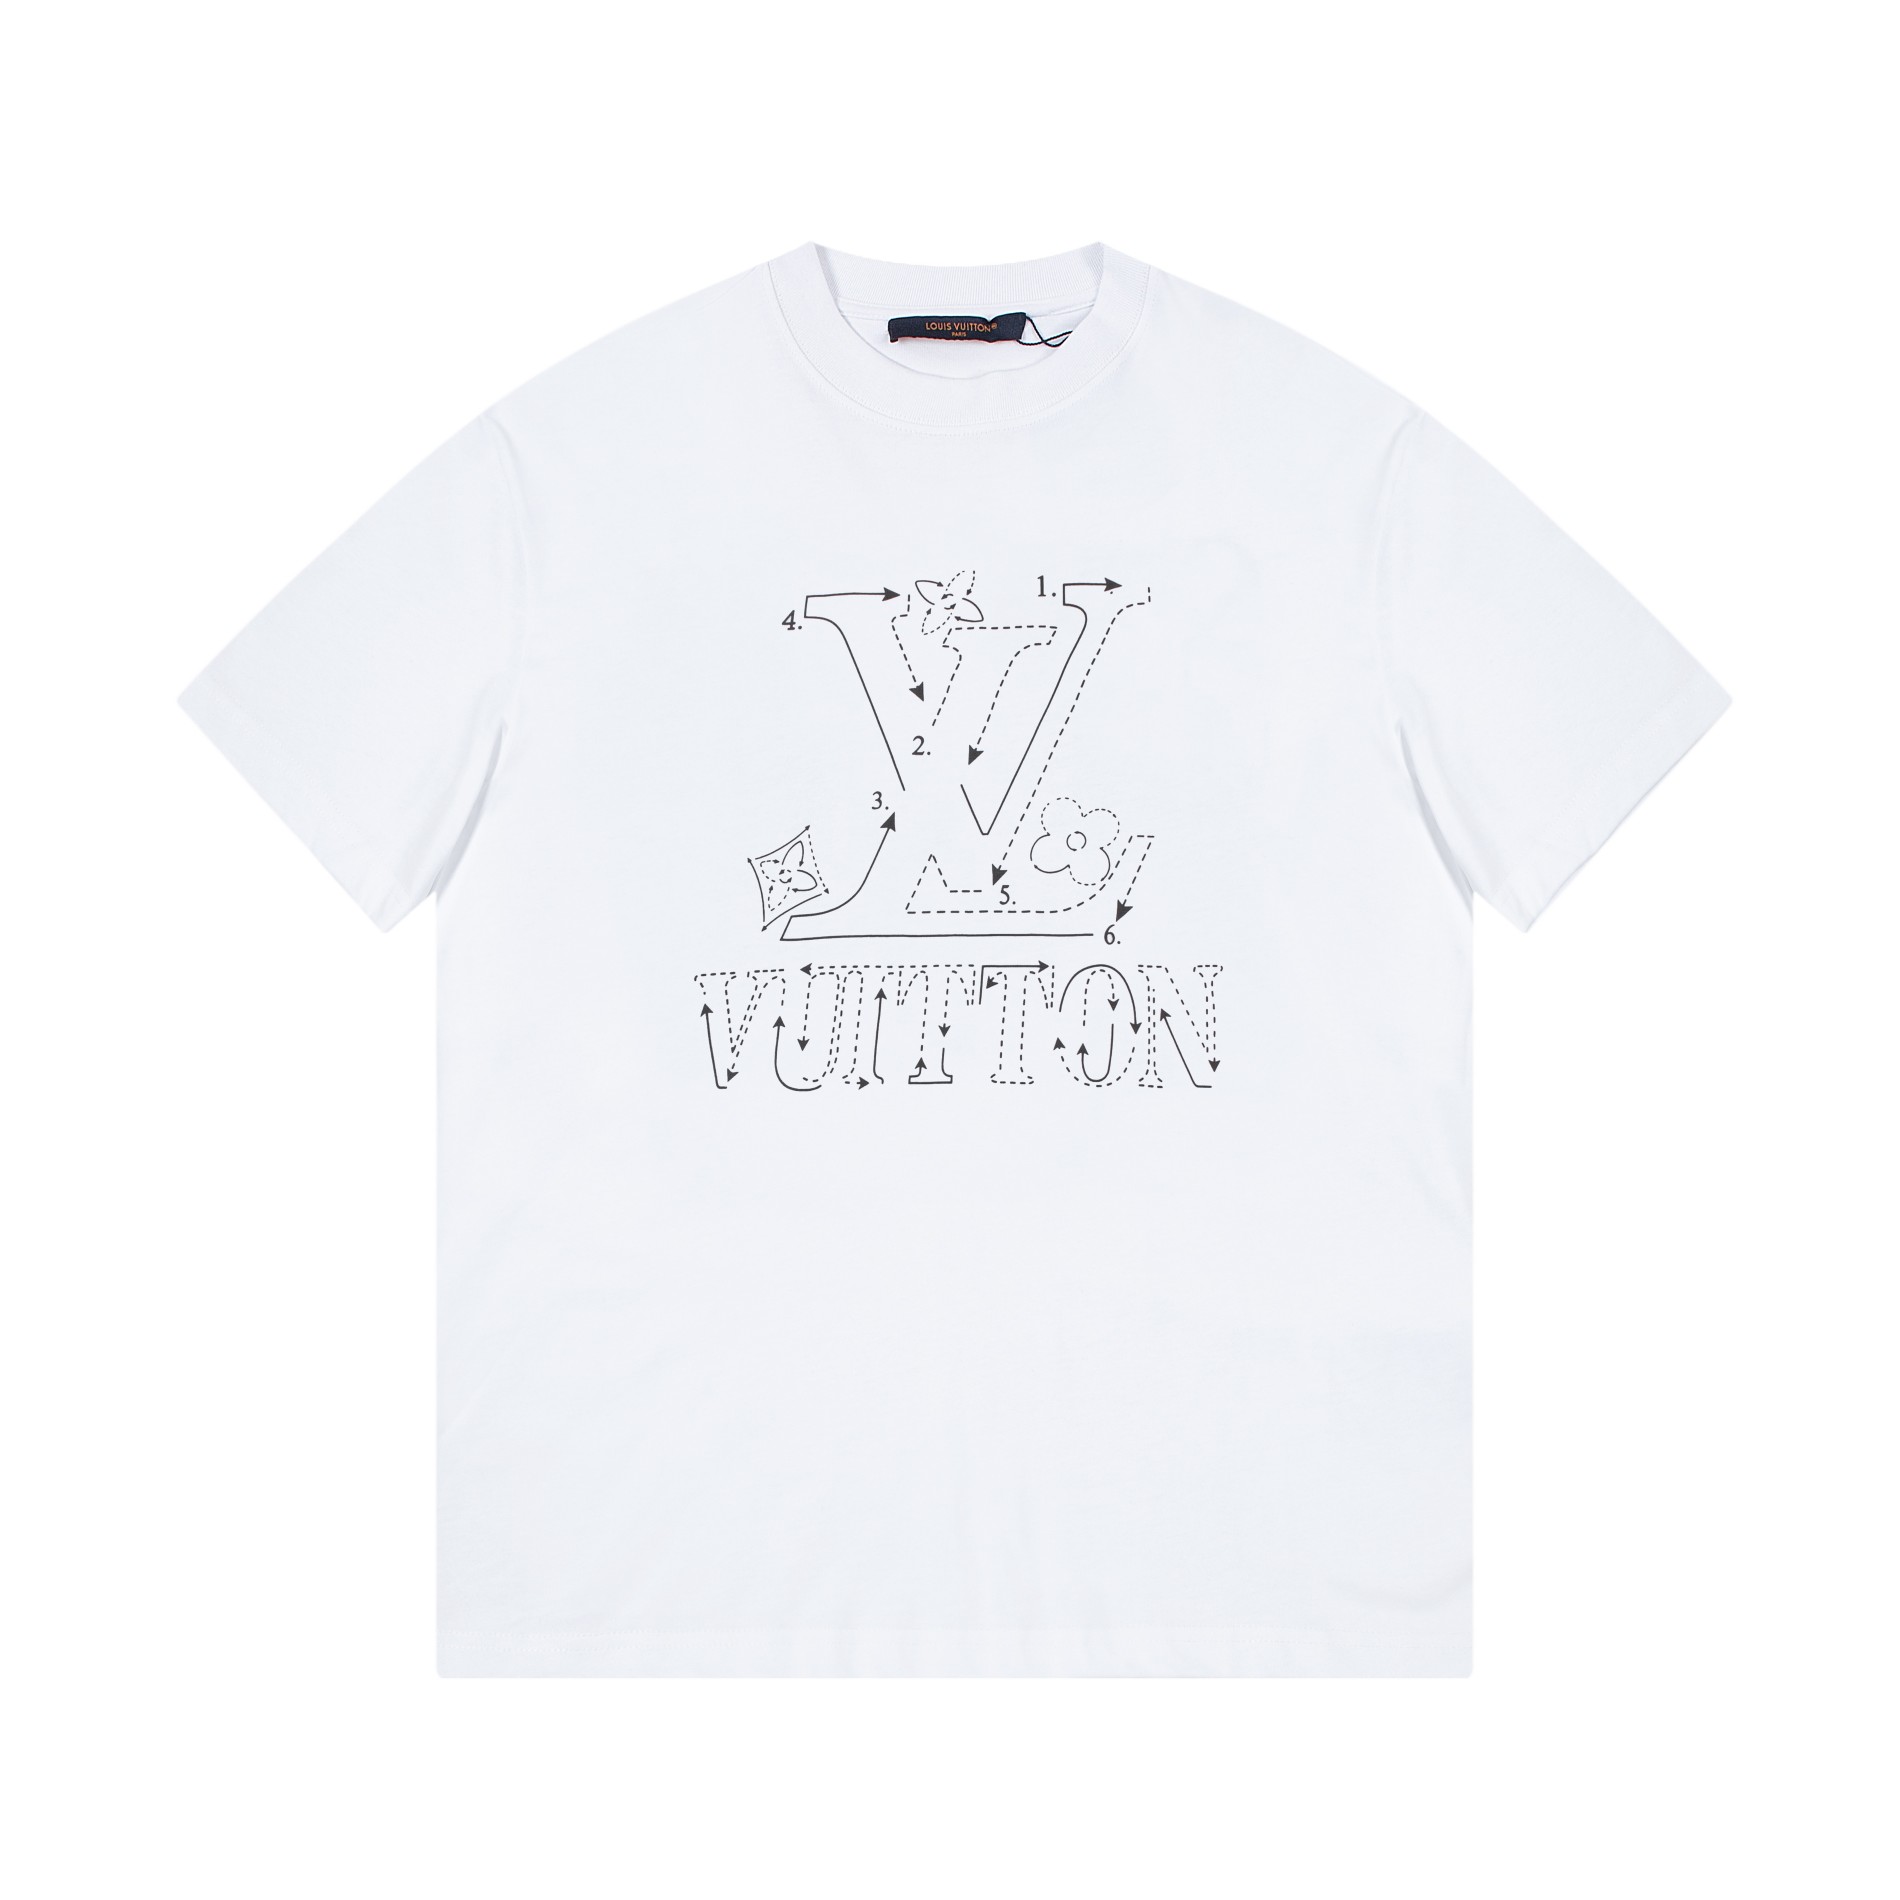 Louis Vuitton Clothing T-Shirt Black White Unisex Cotton Fashion